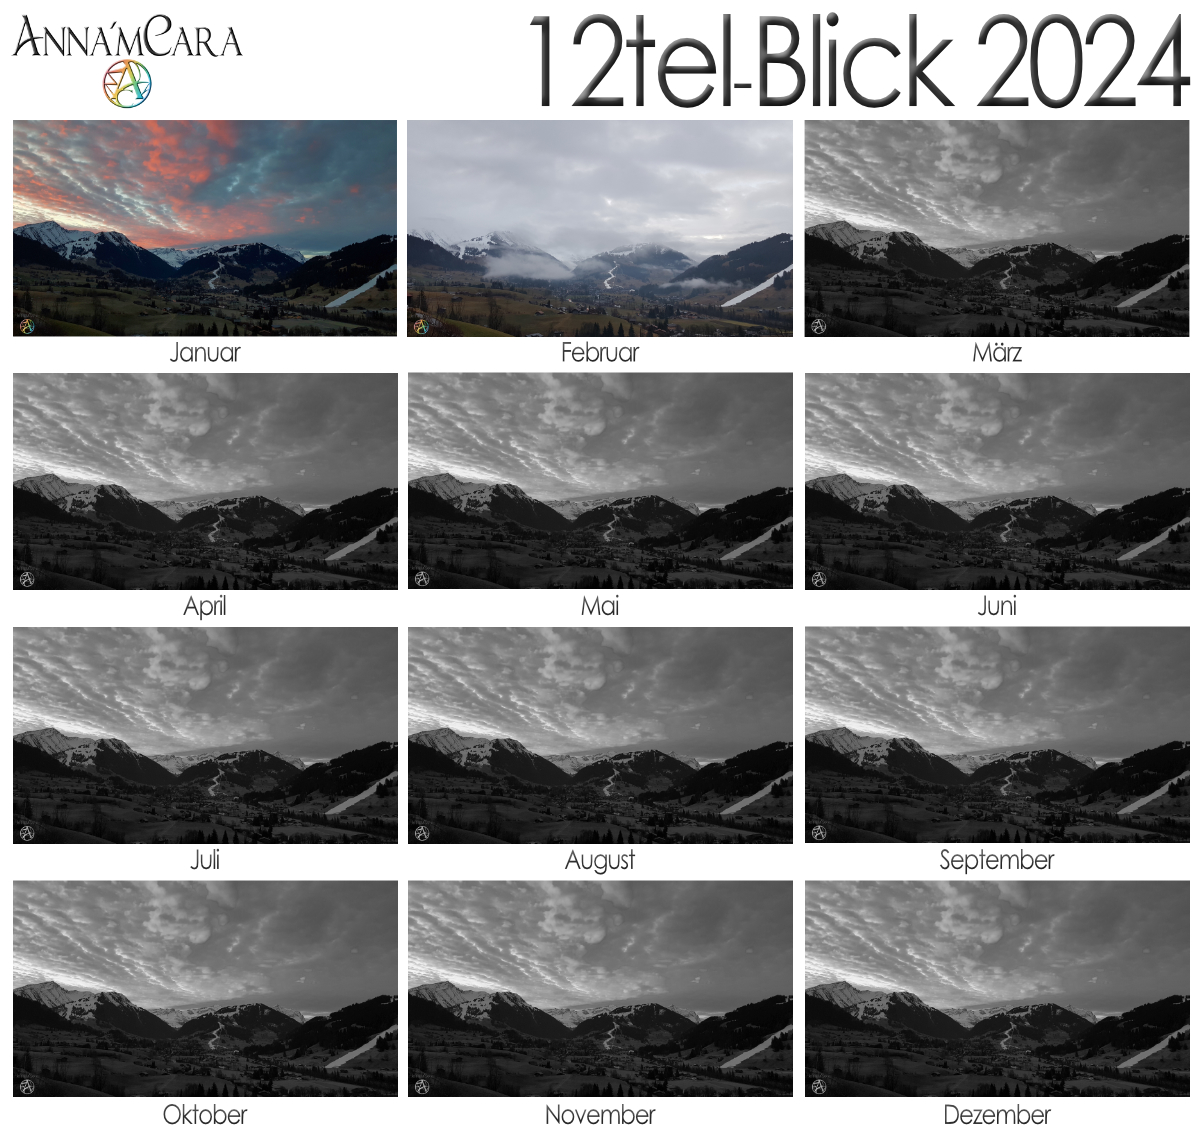 Anna'mCara-Blog - 12tel-Blick - Jahresüberblick - Gstaad - Februar 2024